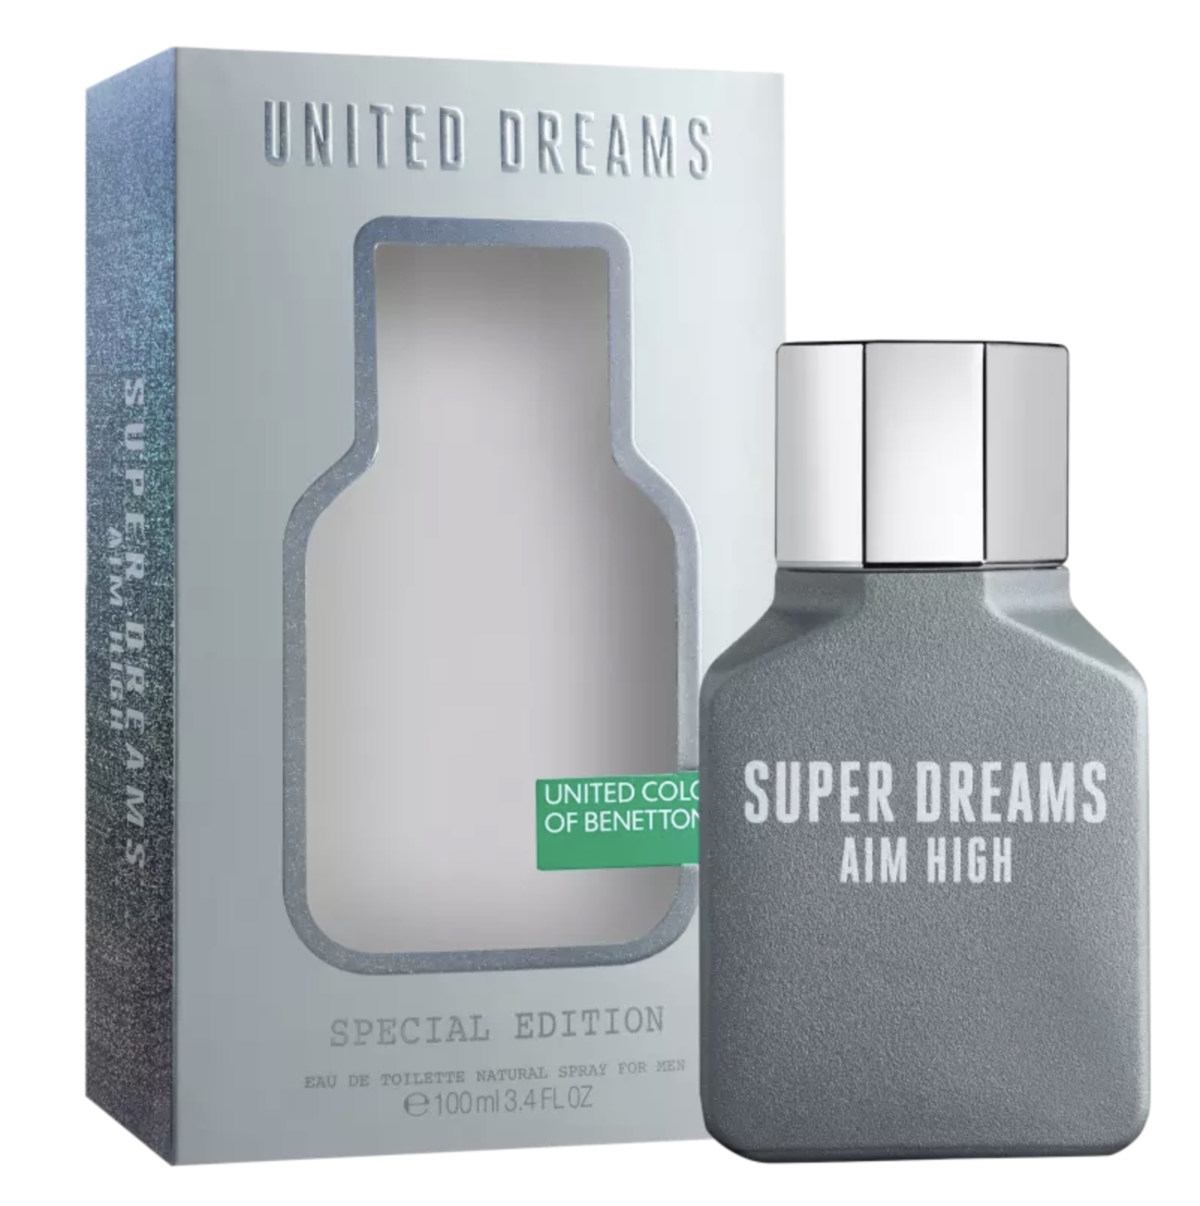 Super Dreams - Aim High by Benetton » Reviews & Perfume Facts